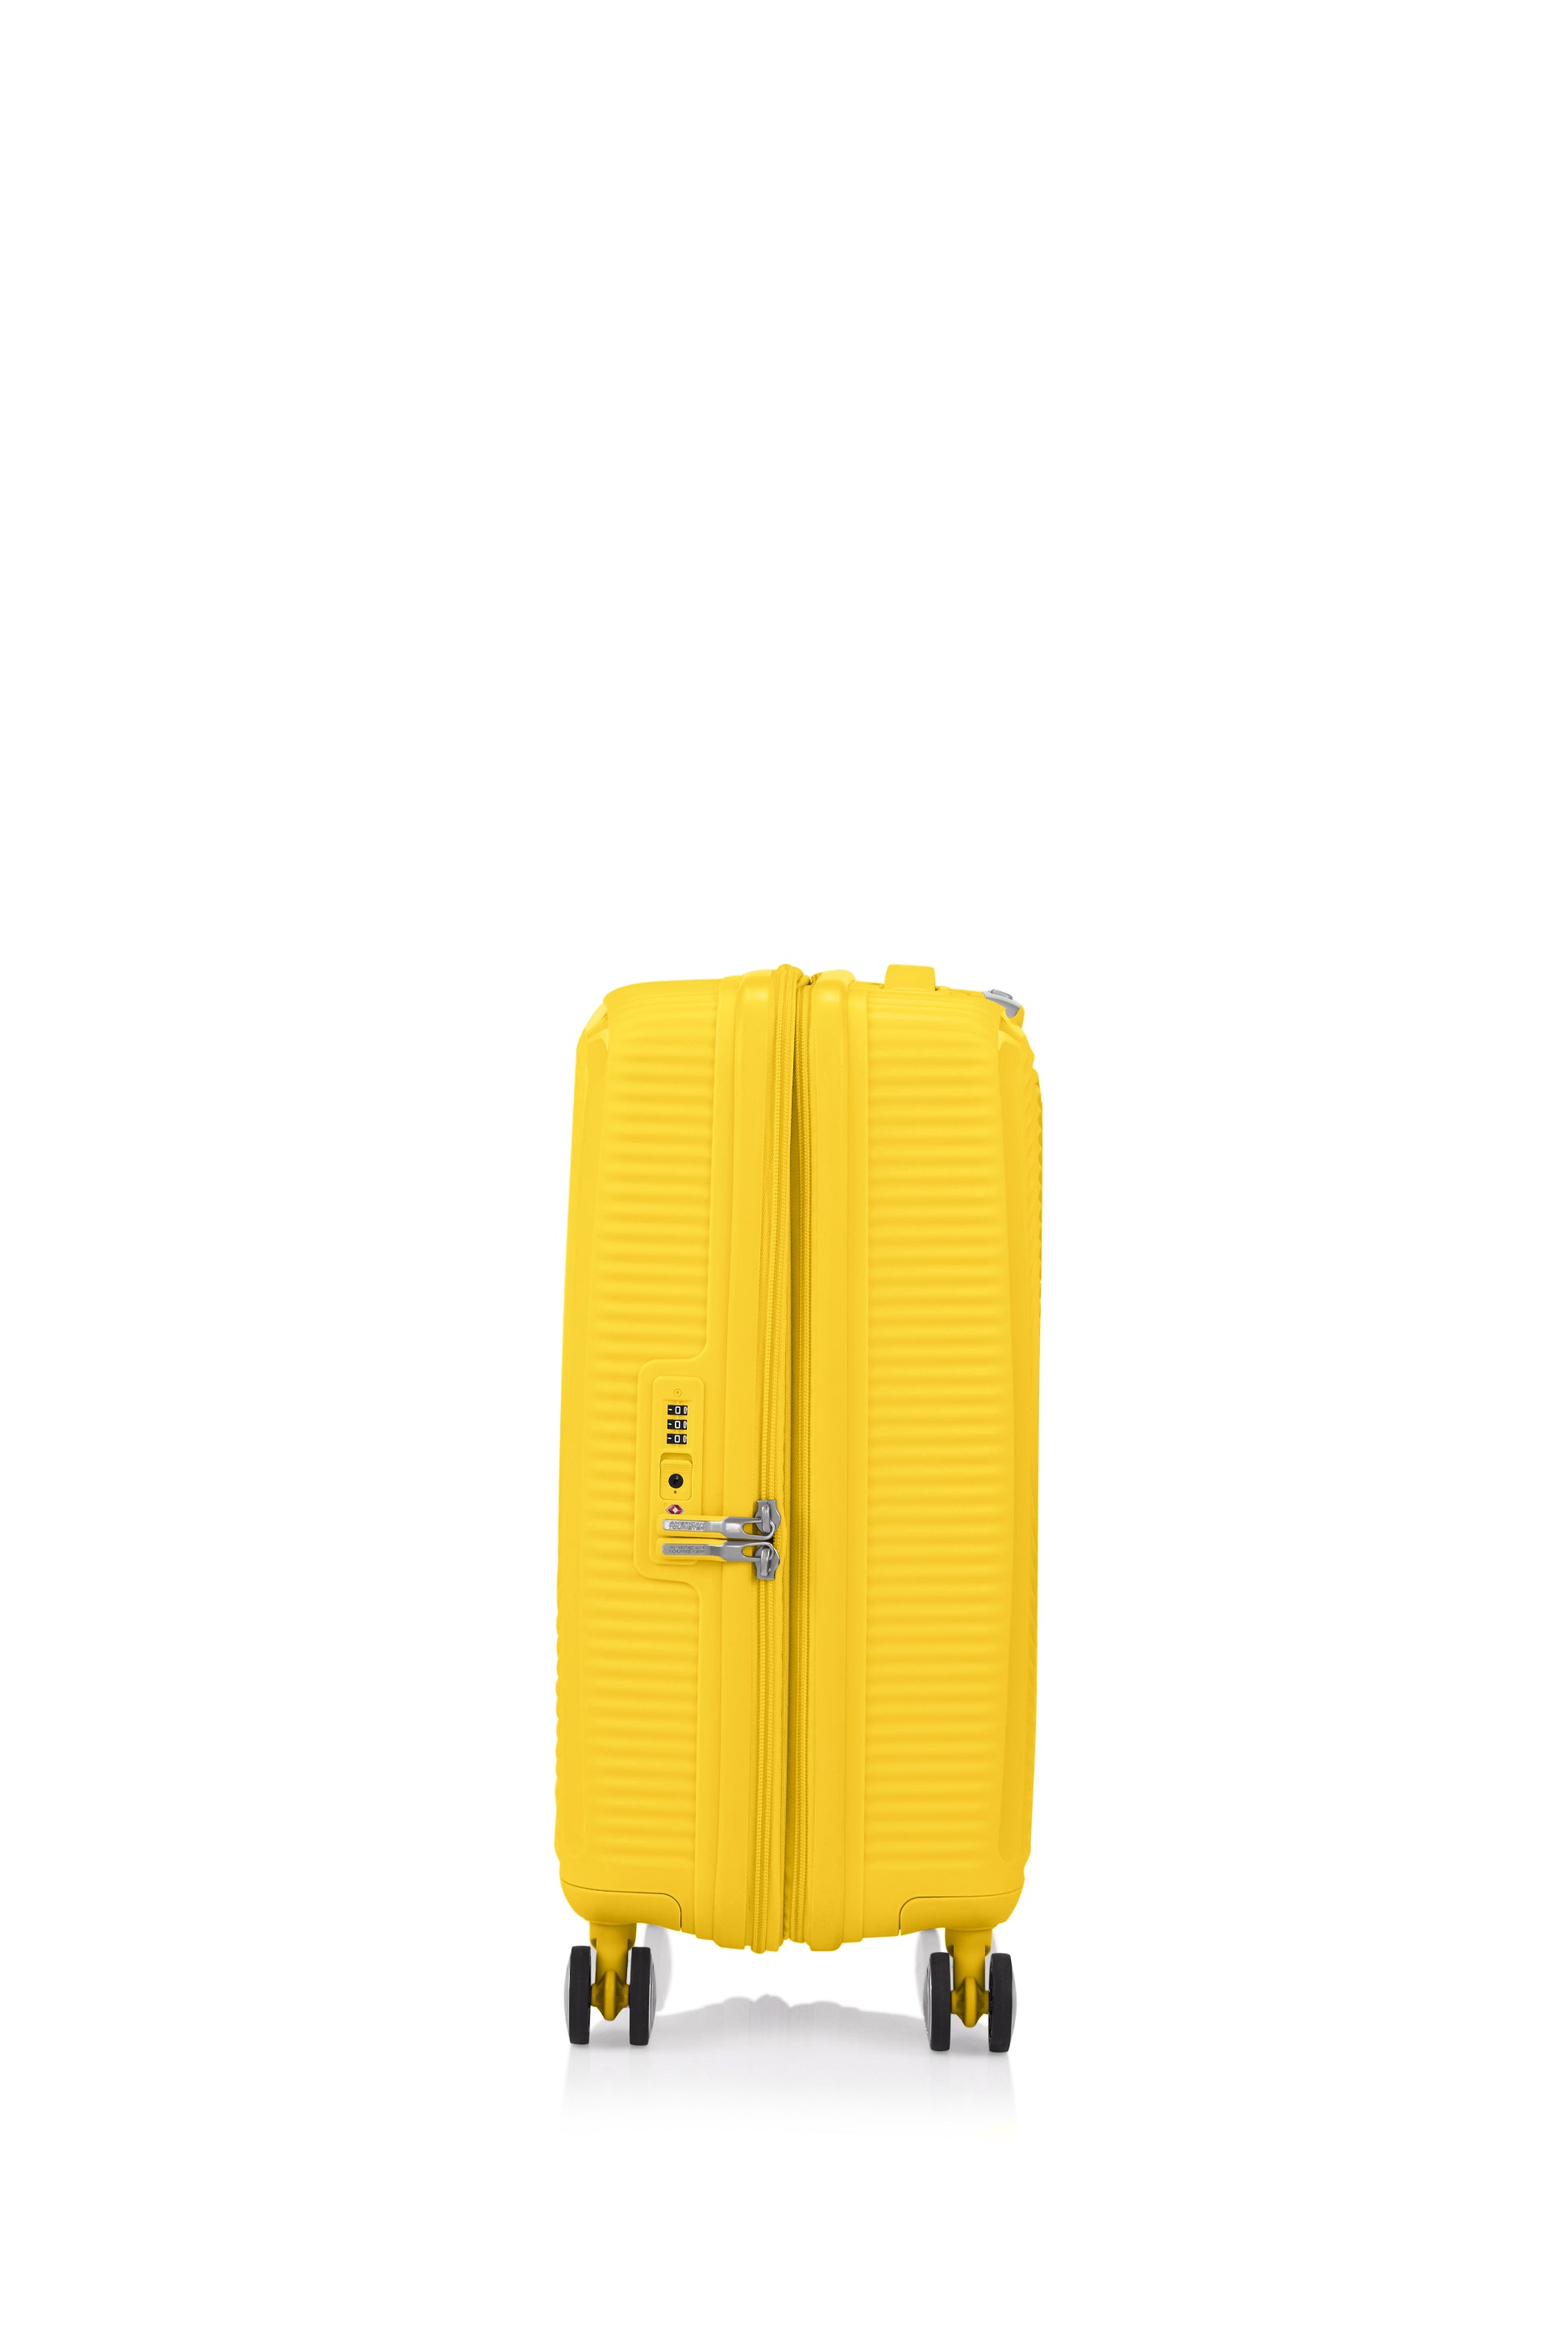 American Tourister - Curio 2.0 55cm Small Suitcase - Golden Yellow-7